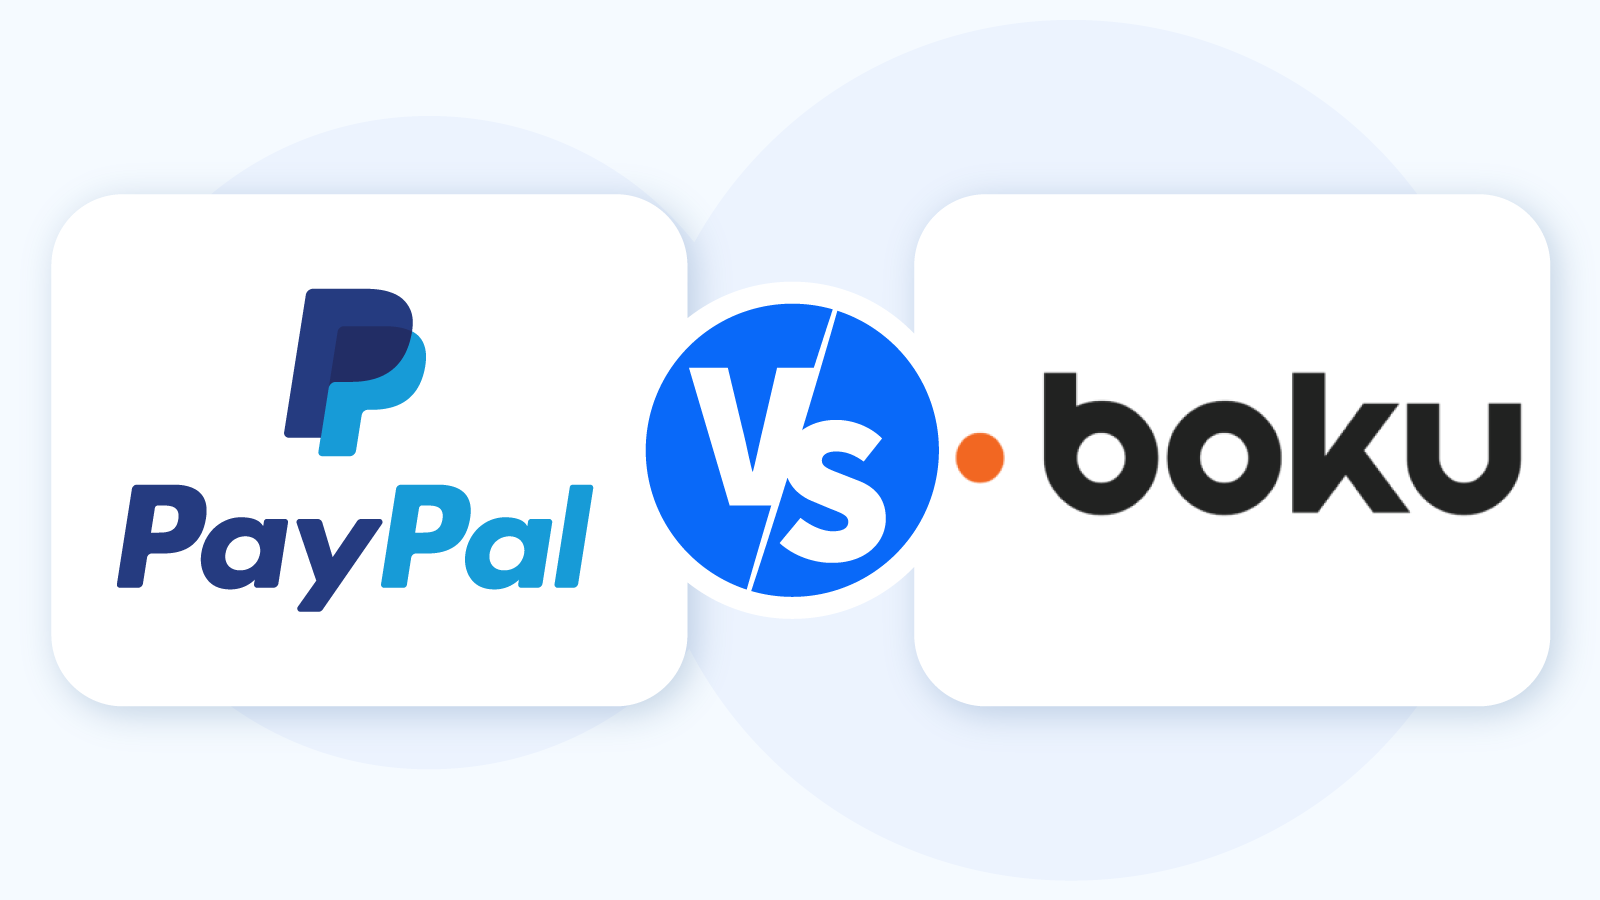 PayPal vs Boku 5 pound deposit casino comparison